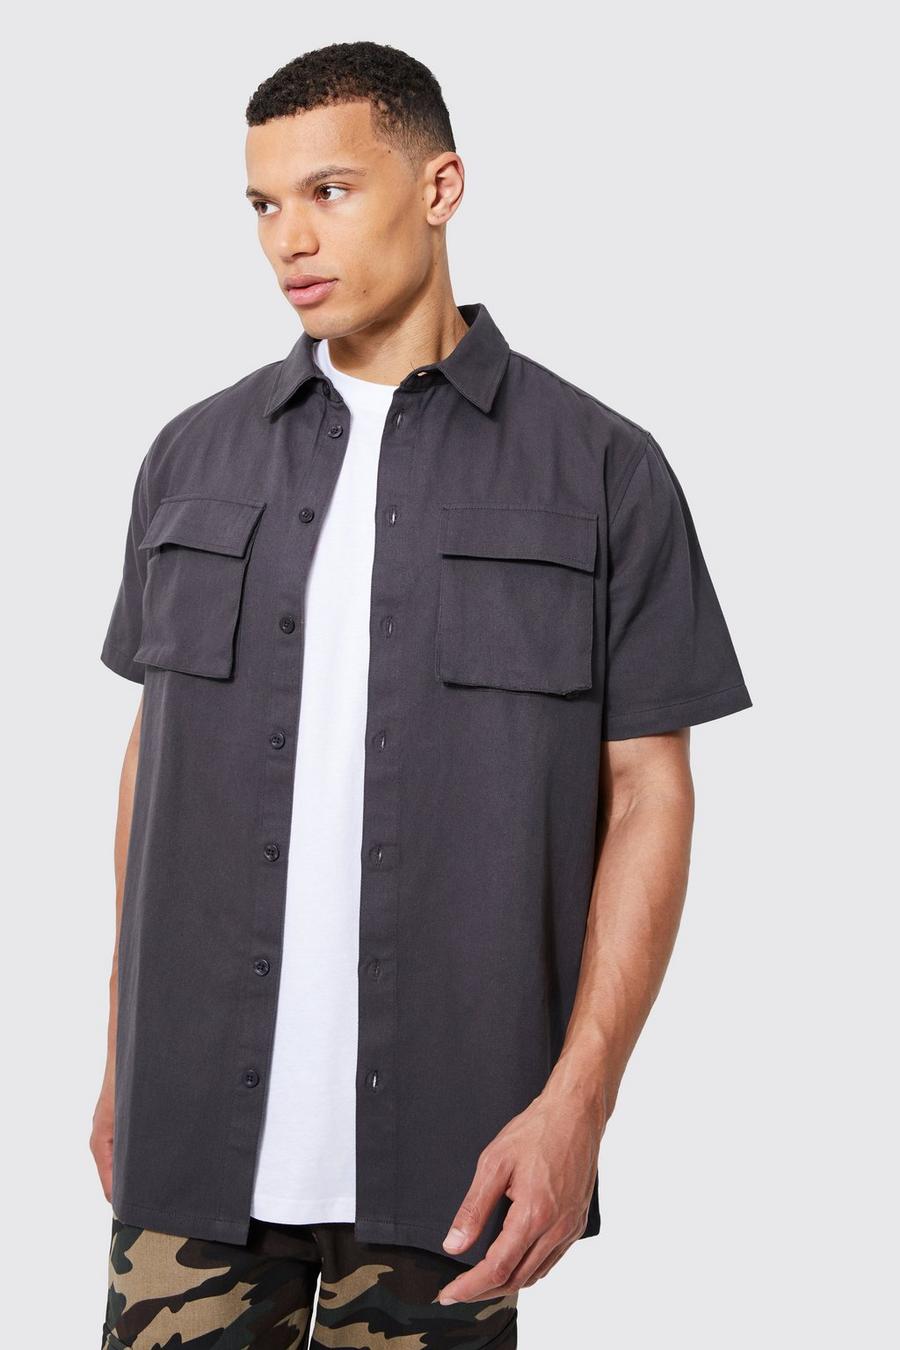 Charcoal grey Tall Short Sleeve Overshirt Utility Shirt image number 1